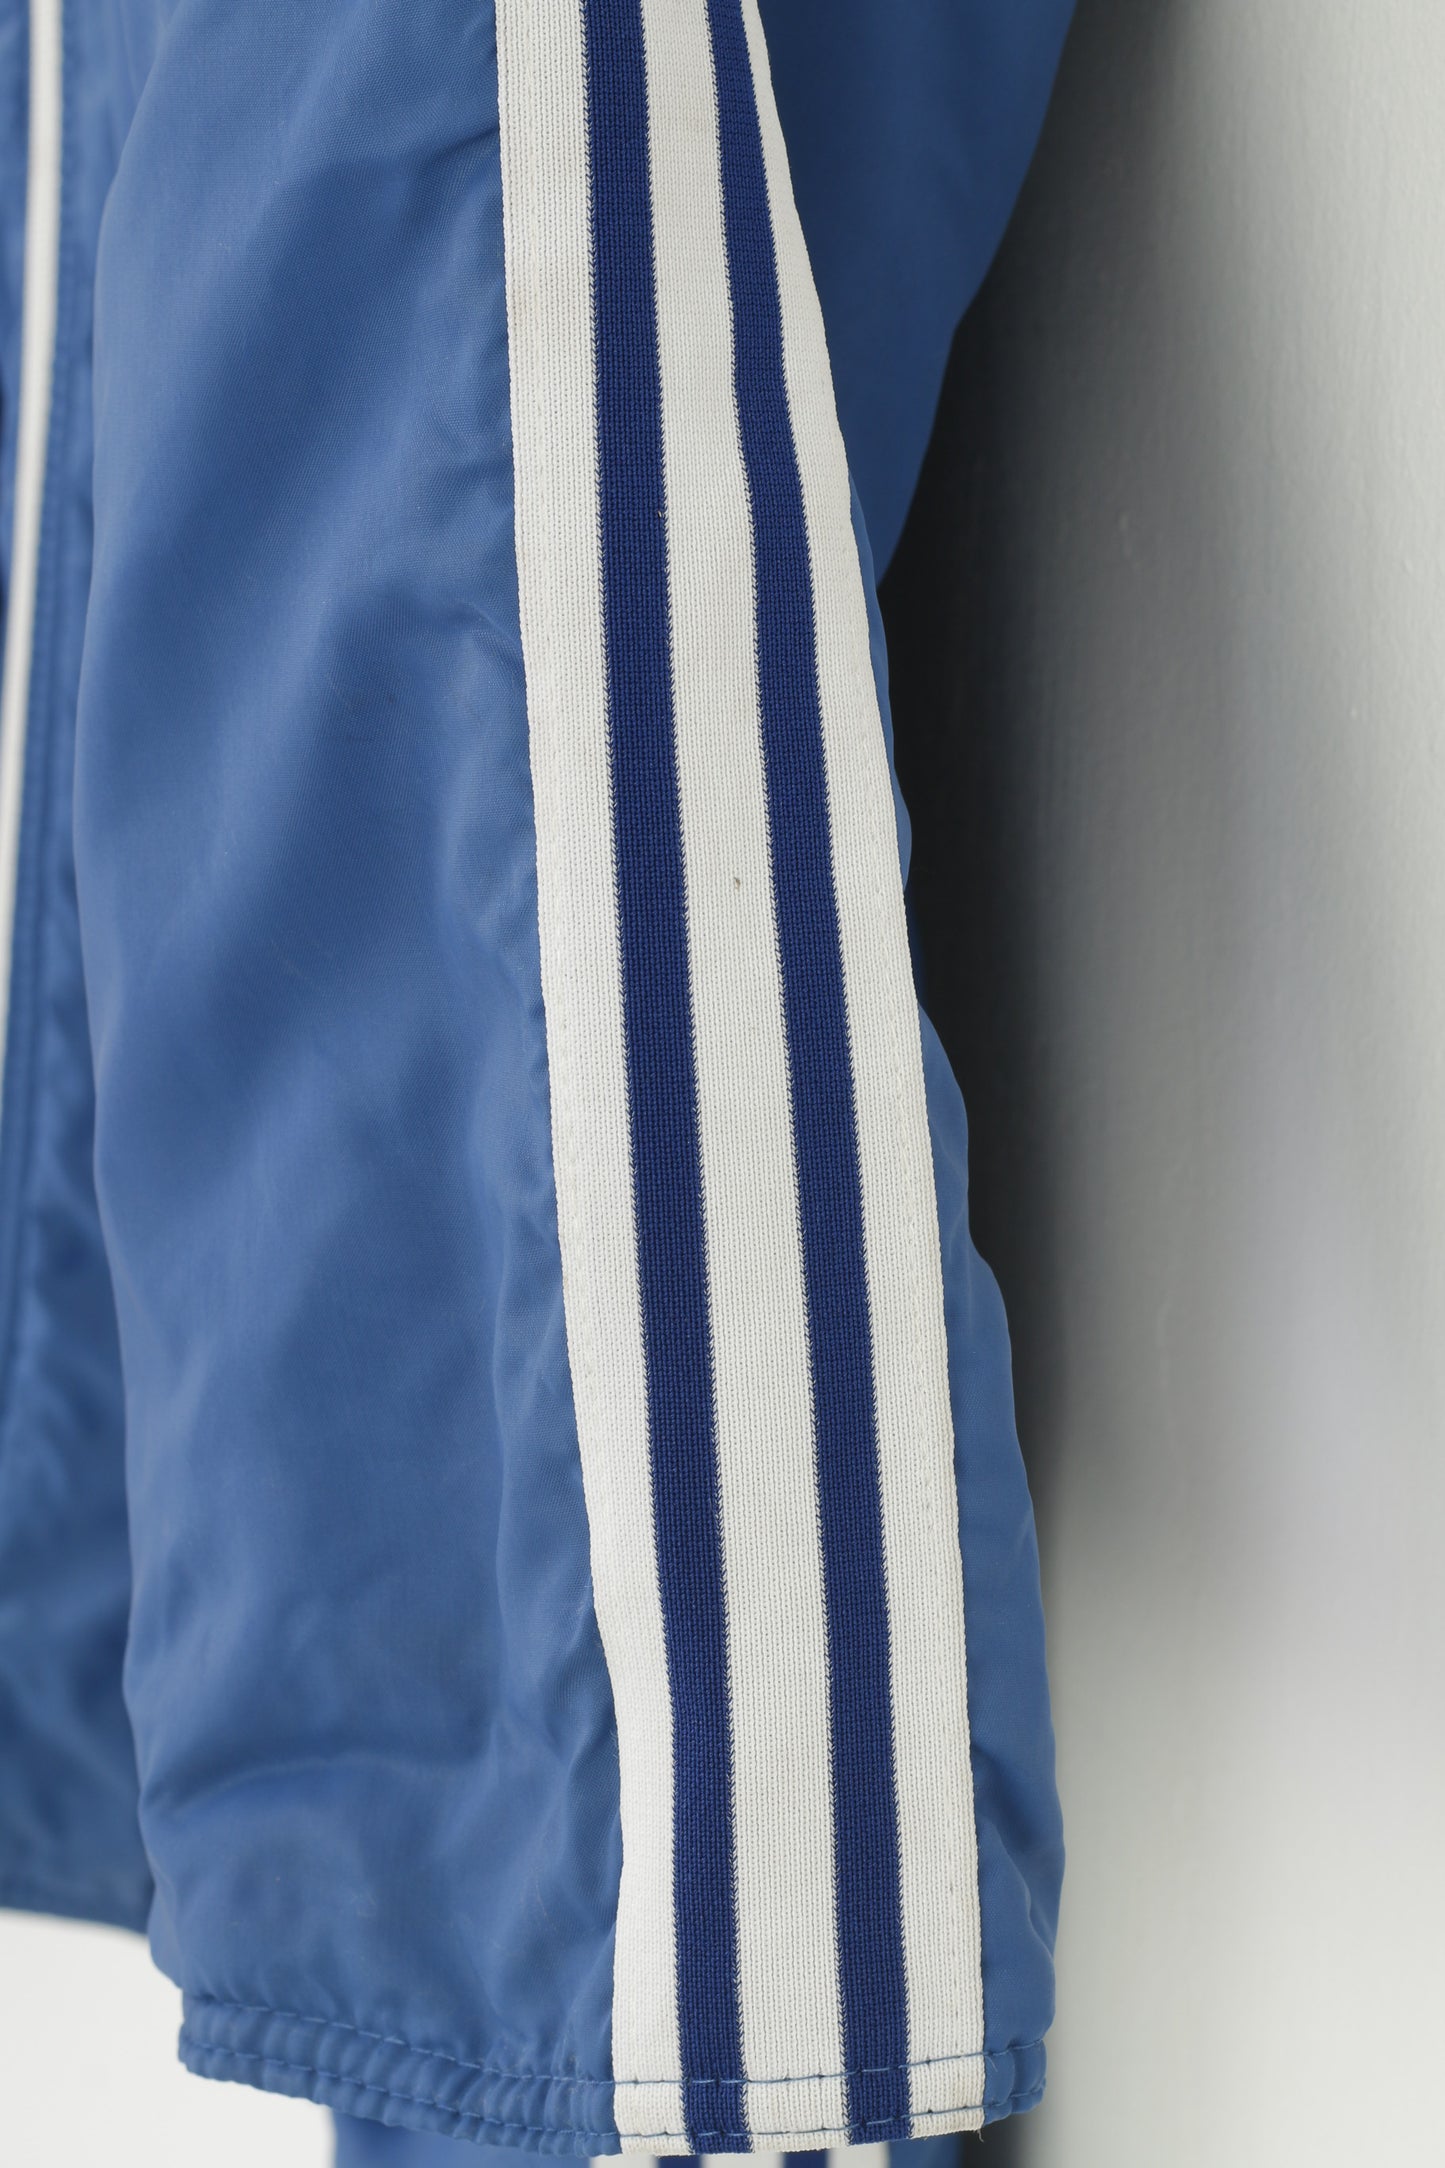 Adidas Men XS Jacket Blue Nylon Vintage 80s Full Zipper Padded Oldschool Top